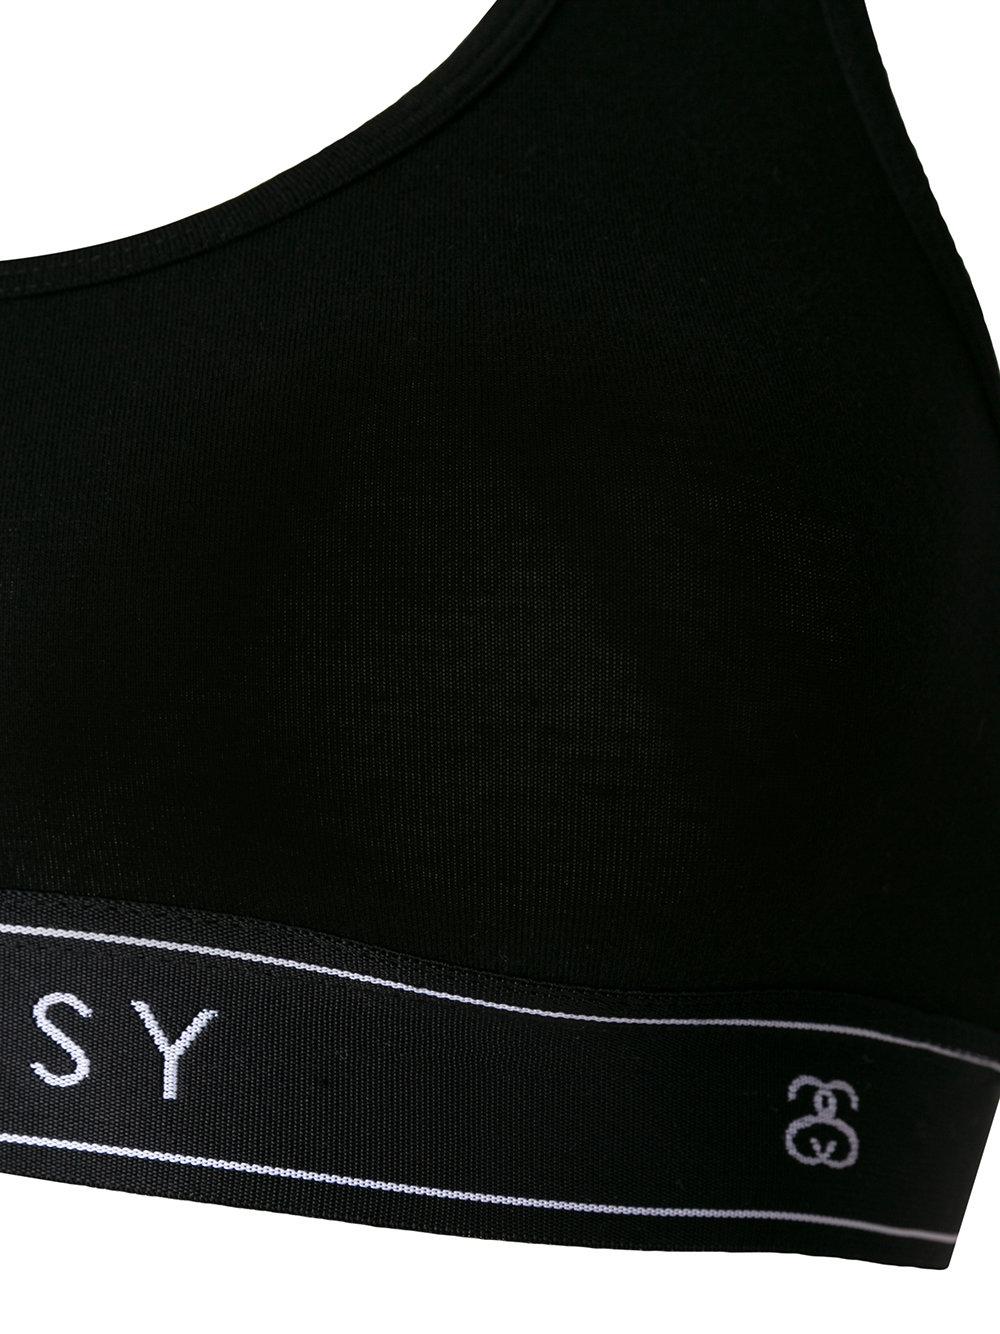 Stussy Logo Elastic Band Sports Bra in Black